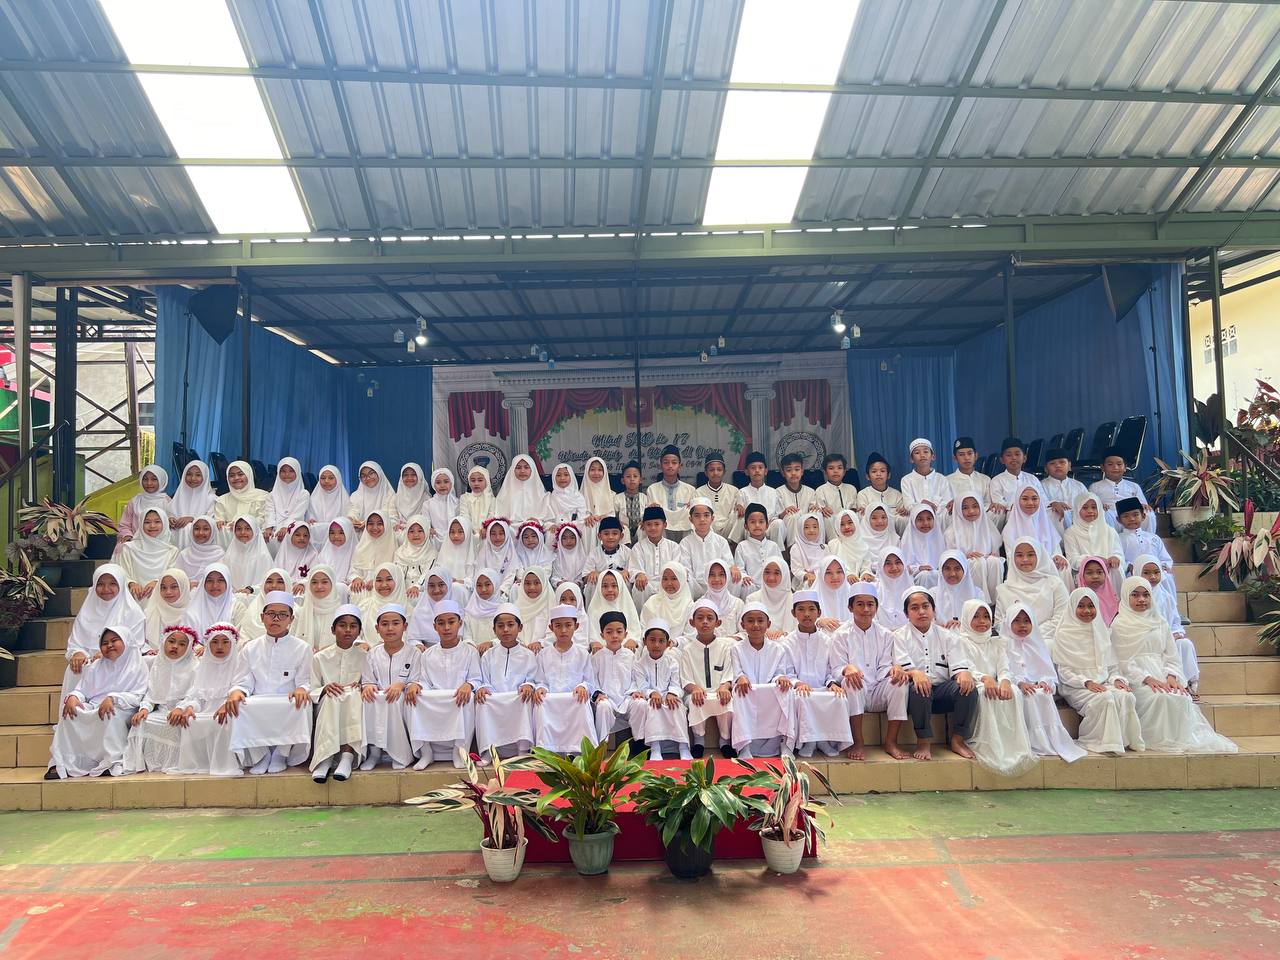 Sebanyak 35 siswa penghafal Al-Qur’an SDN Surya Kencana CBM, Kota Sukabumi, telah berhasil menyelesaikan hafalannya dan telah di wisuda. (FOTO : dok/radarsukabumi)